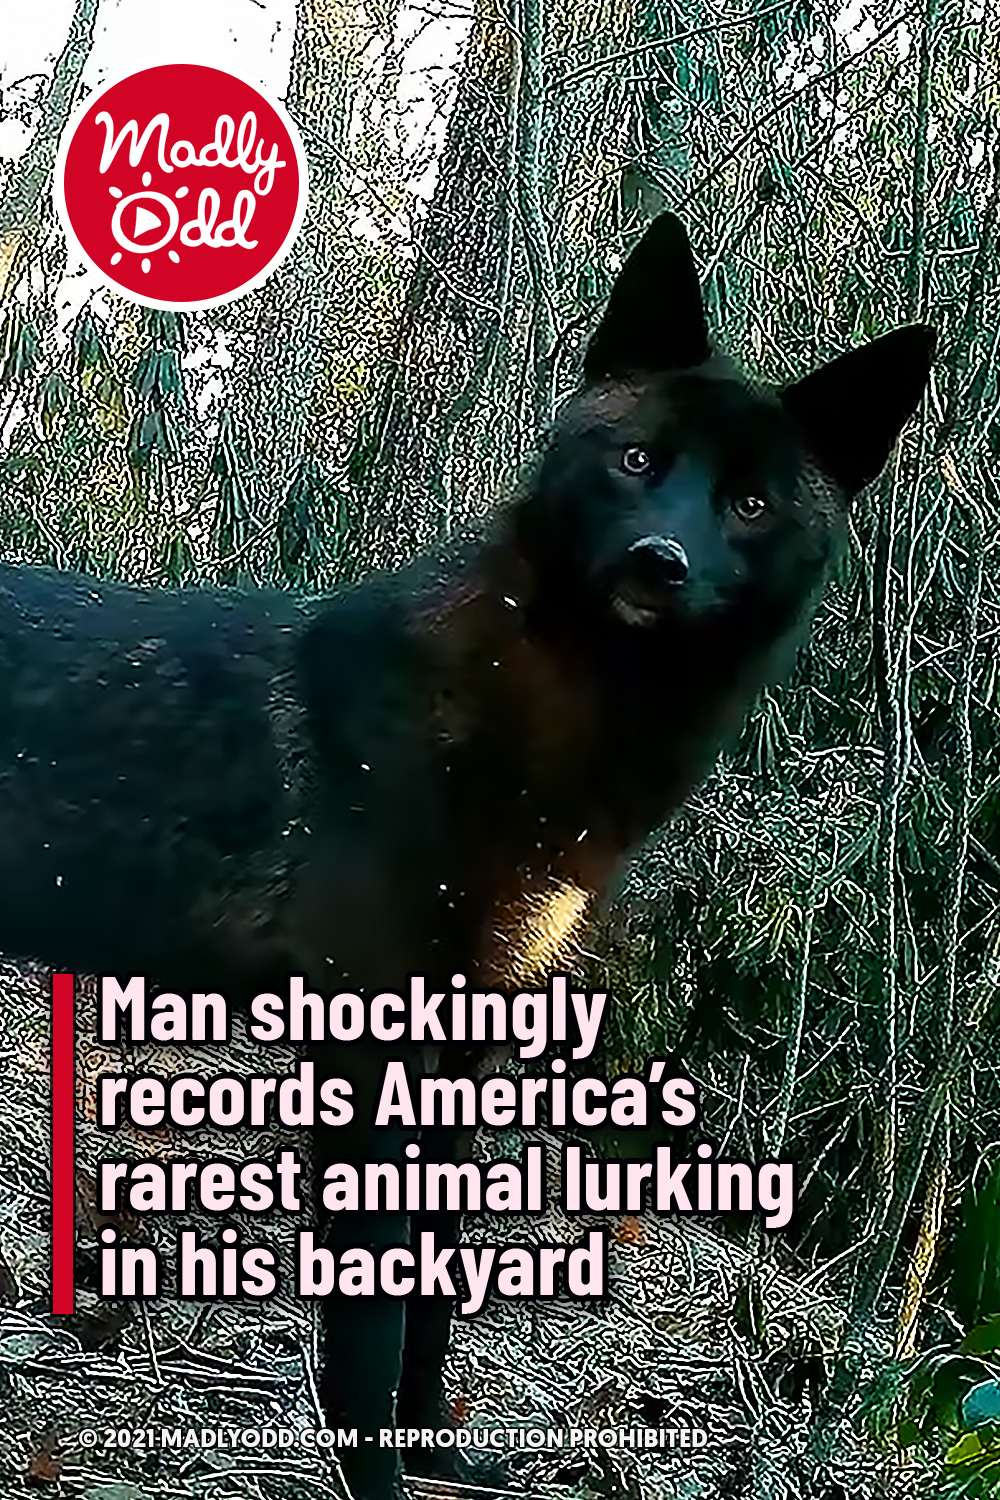 Man shockingly records America’s rarest animal lurking in his backyard